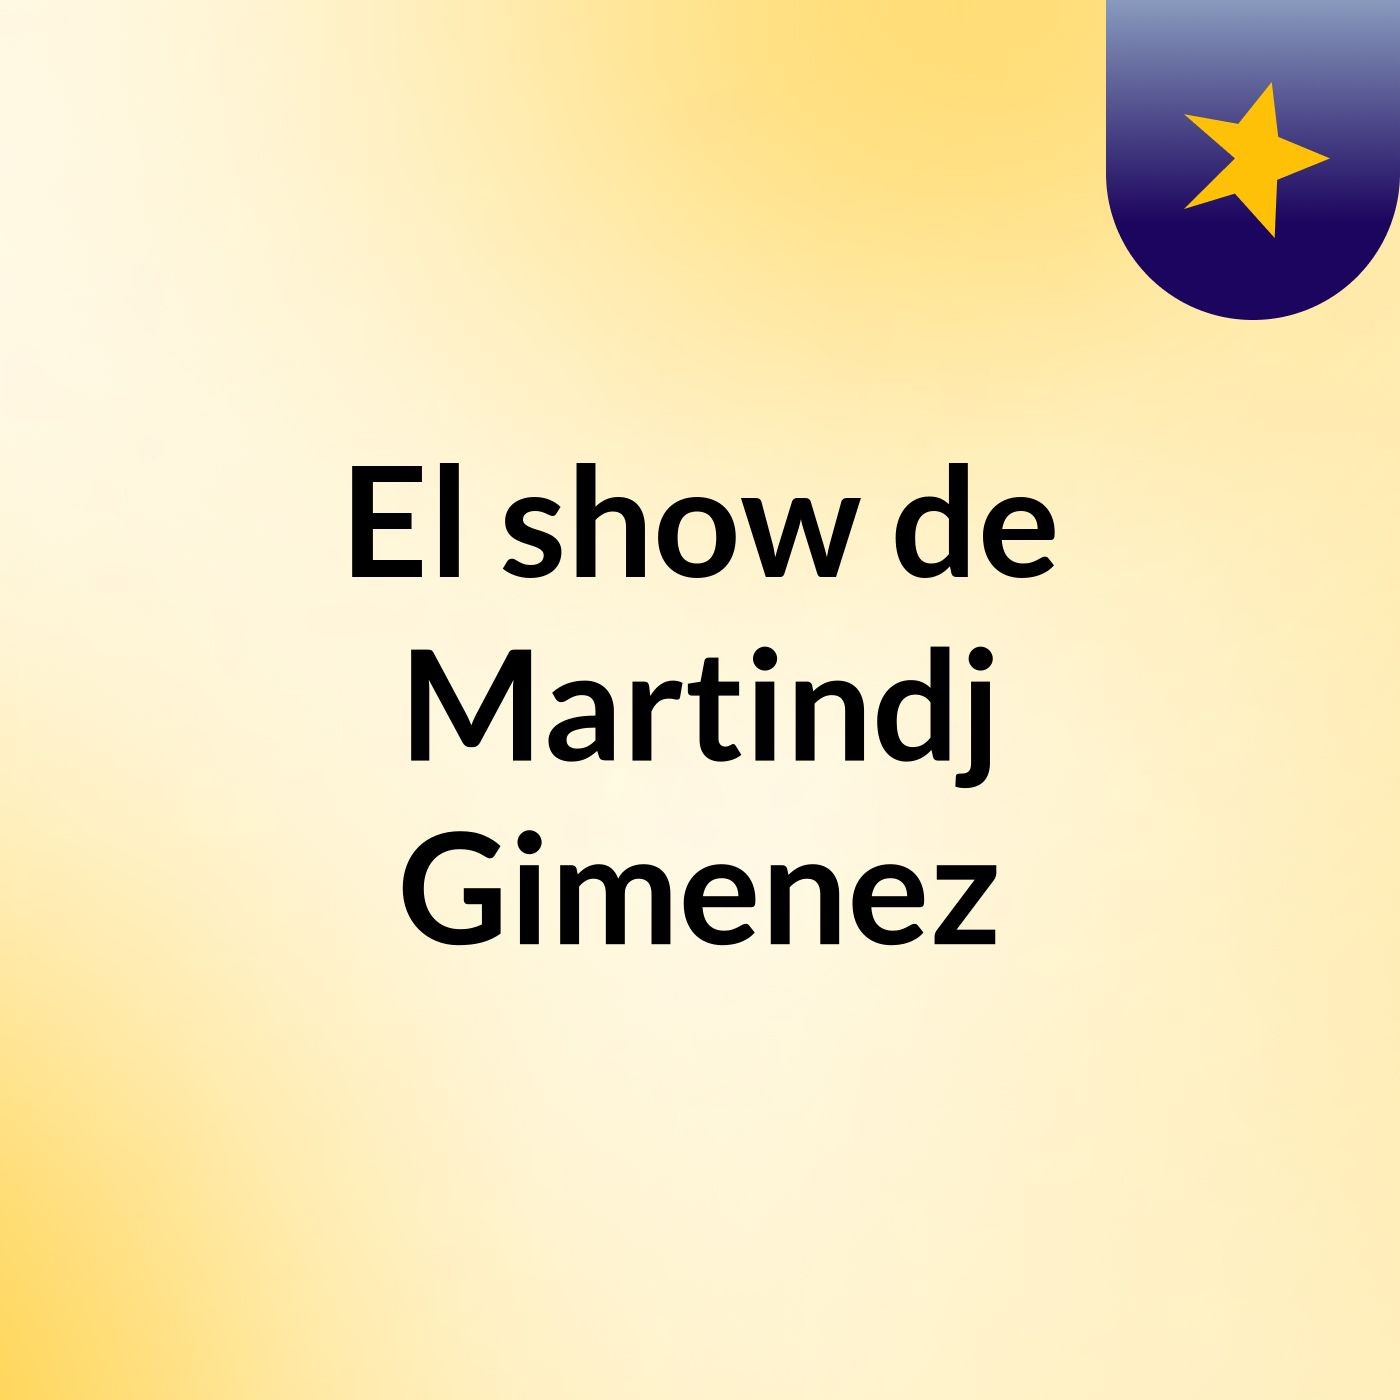 El show de Martindj Gimenez